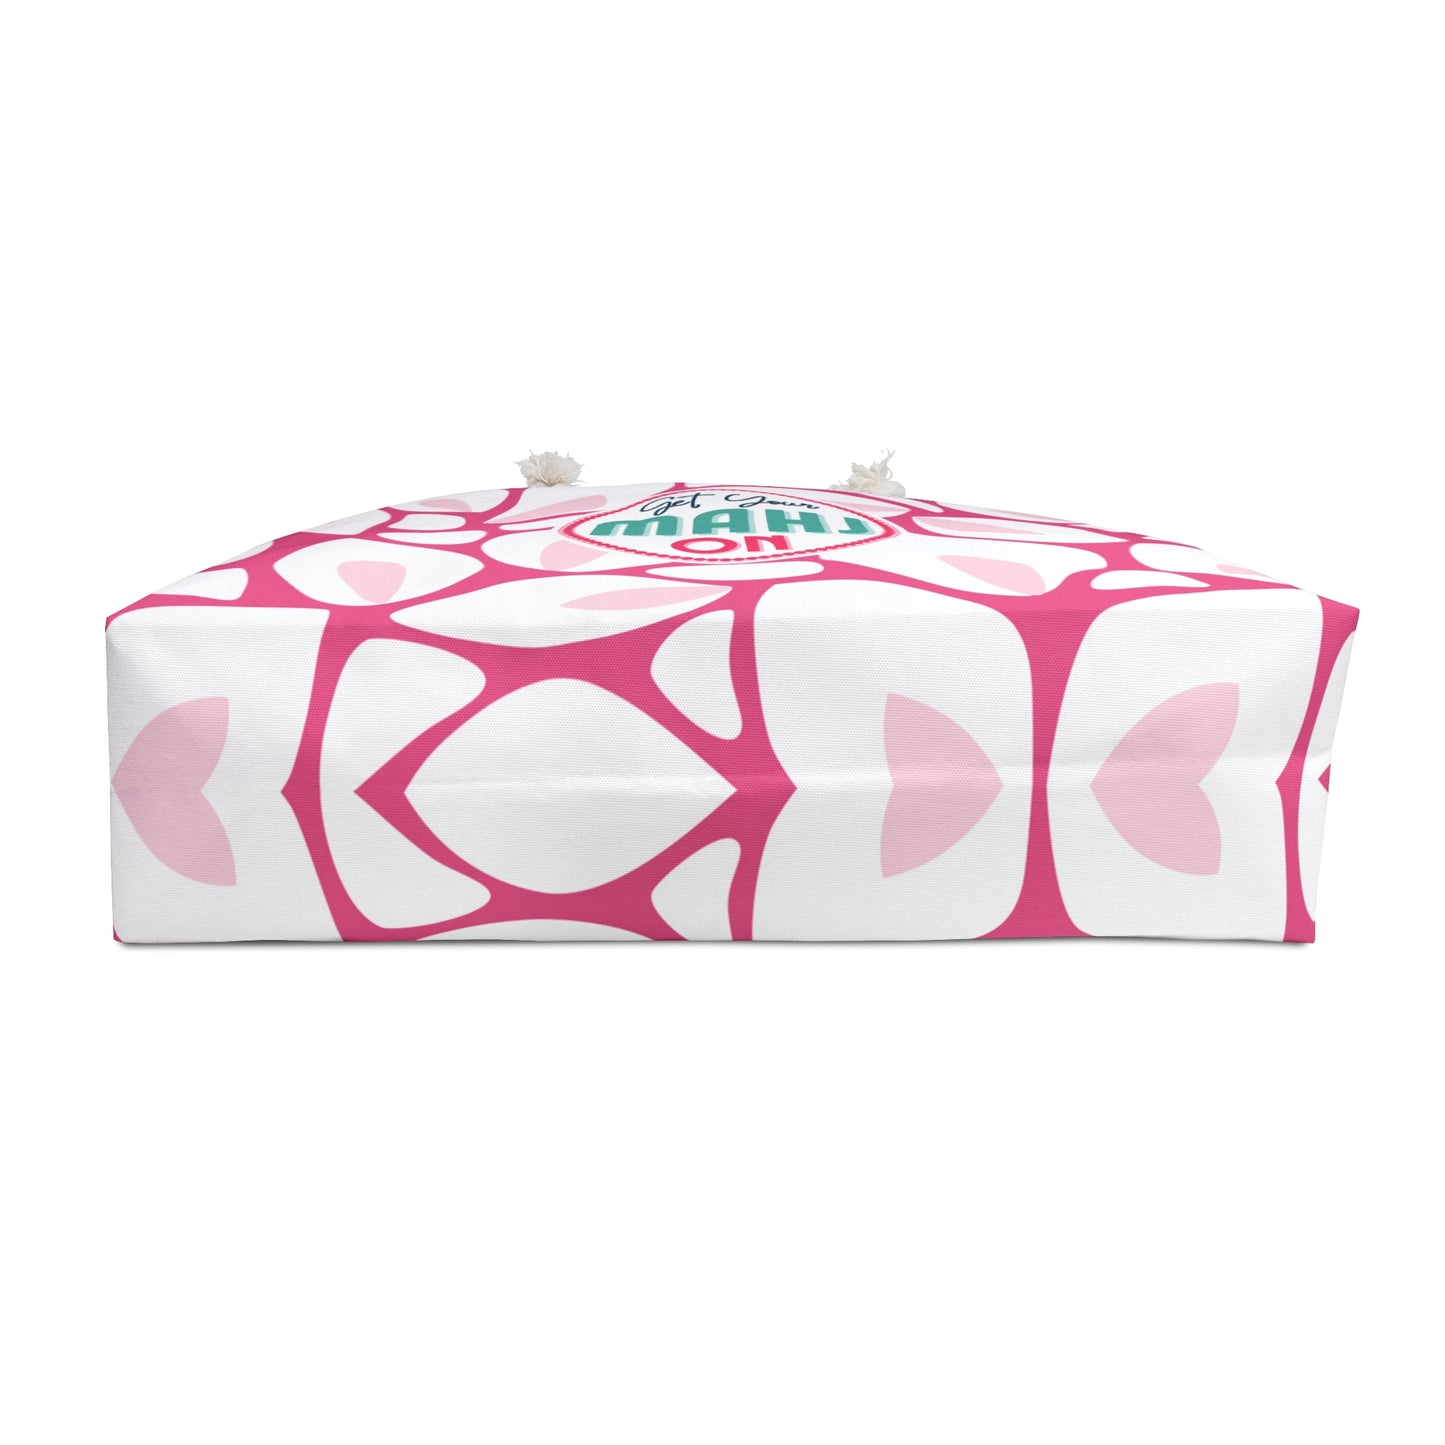 Mahjong Tote Bag- Oversize Pink Bag to Hold All Your Mahjongg Tiles, Racks, Cards, Accessories and More! Great Mah Jongg Gift Idea.